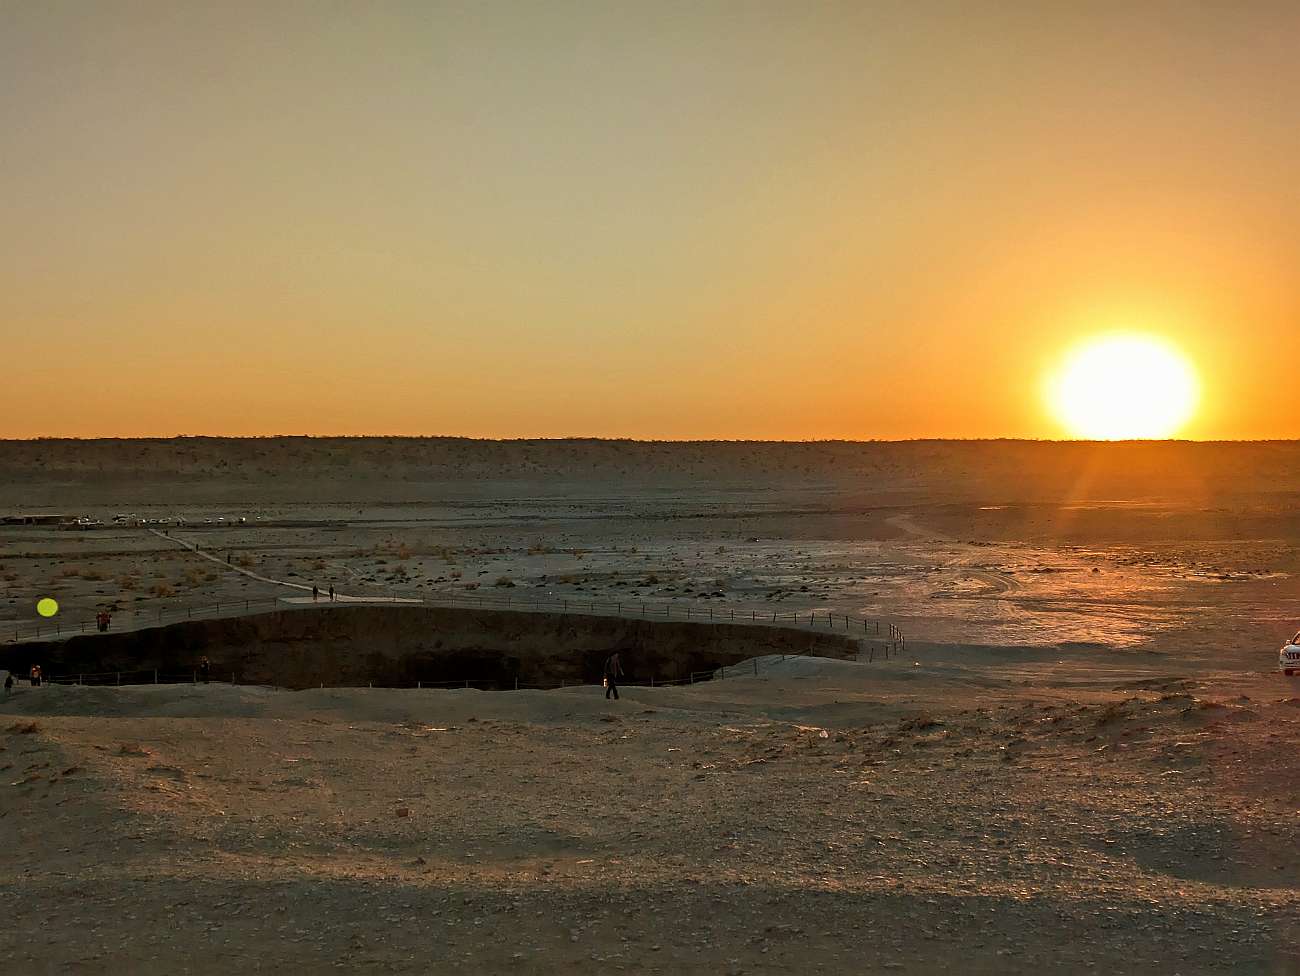 The Gates of Hell (Darwaza, Turkmenistan) - at dawn